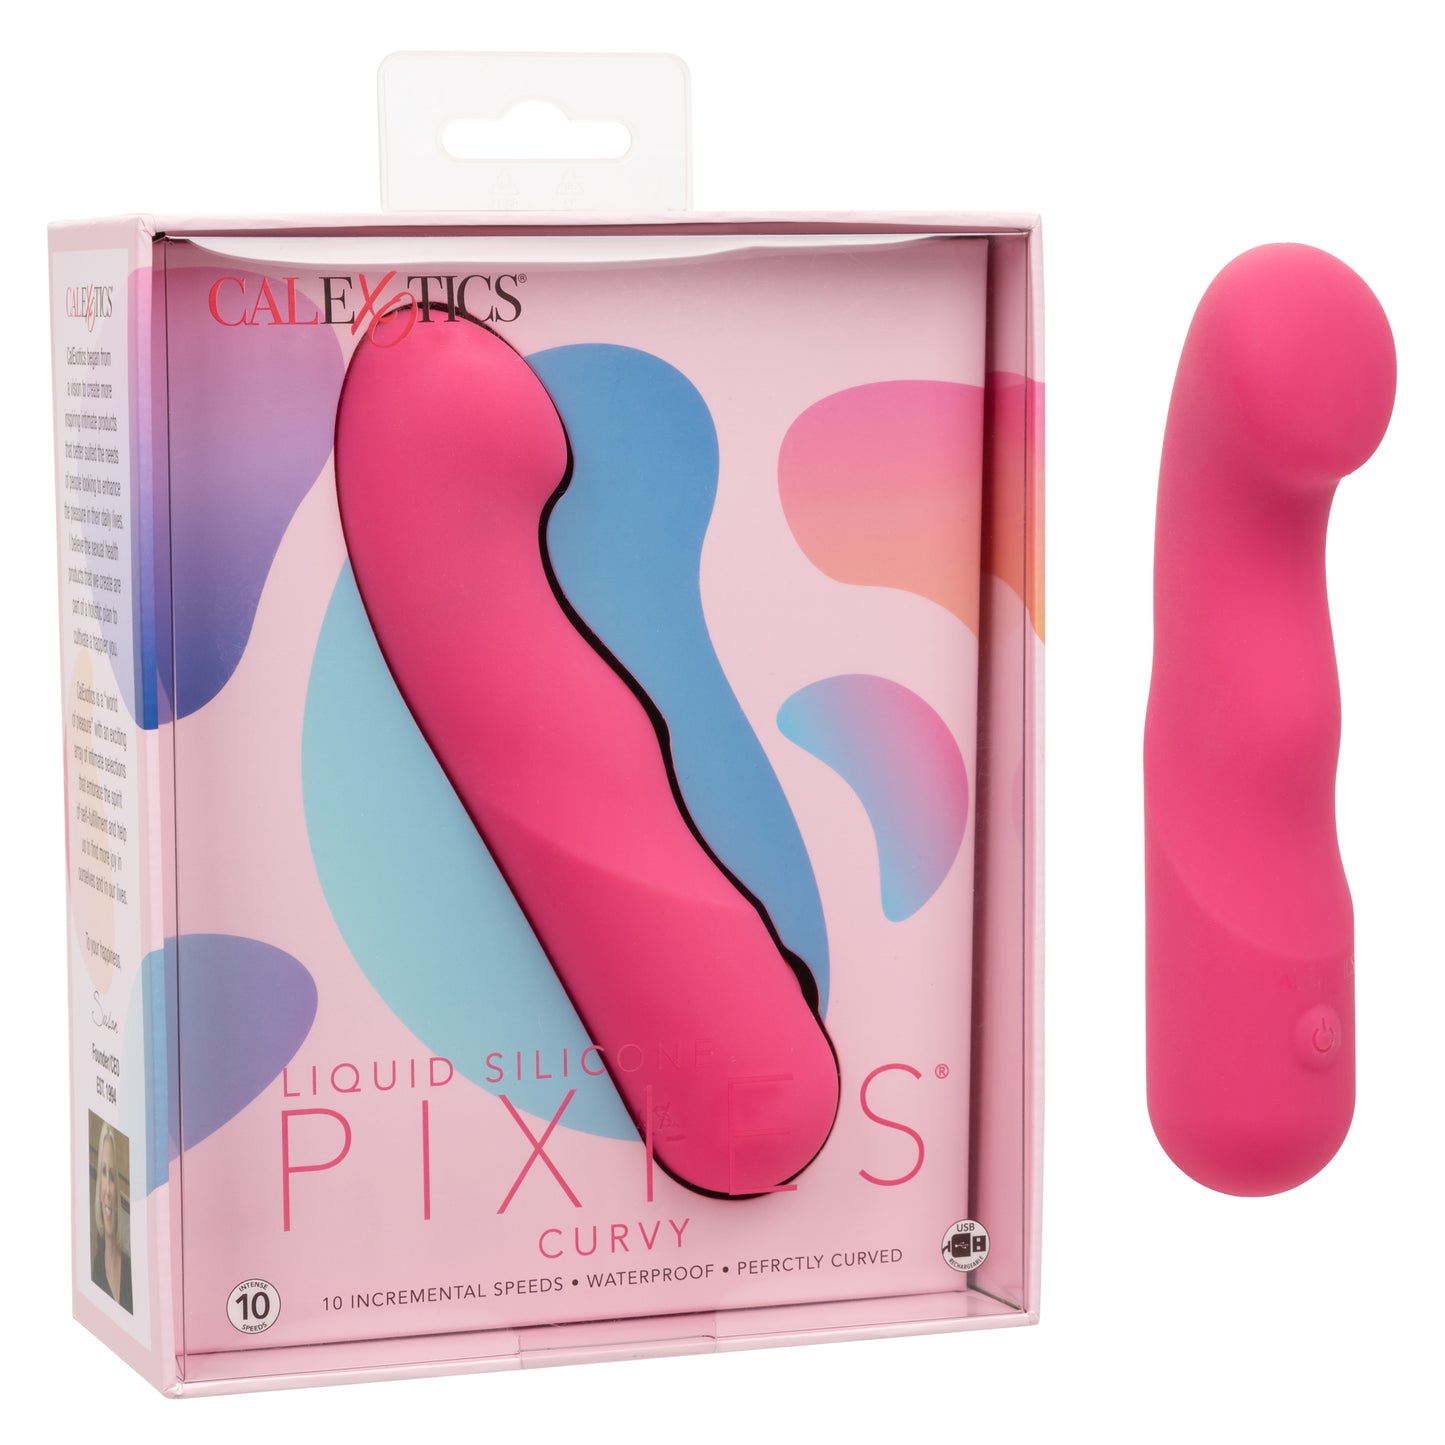 Liquid Silicone Pixies Curvy - Pink